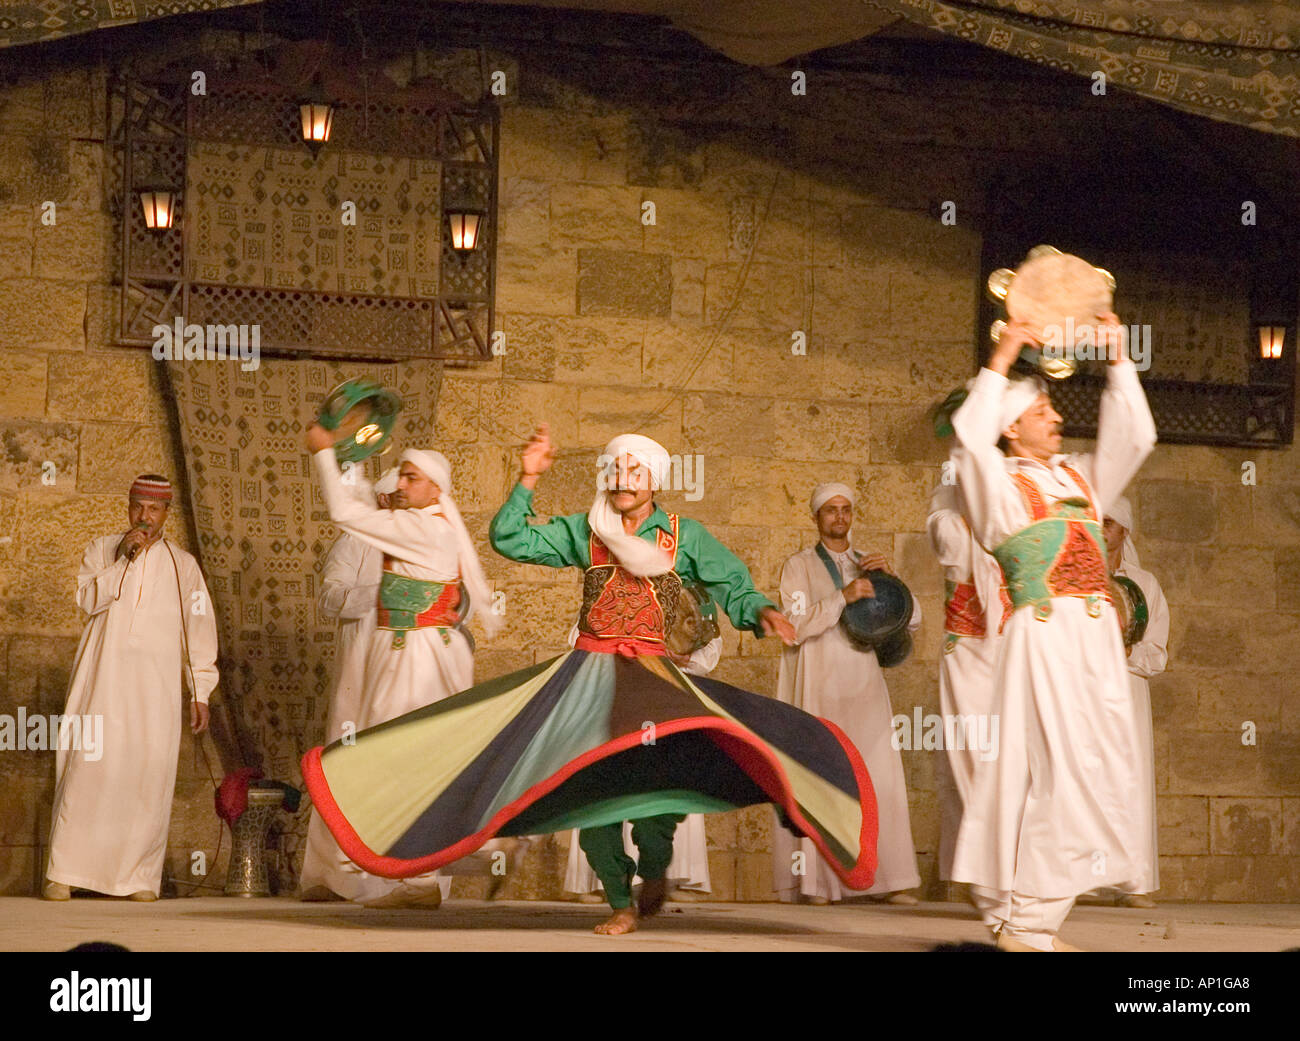 Sufi Dance Troup Citadel Cairo Egypt Middle East DSC 4003 Stock Photo